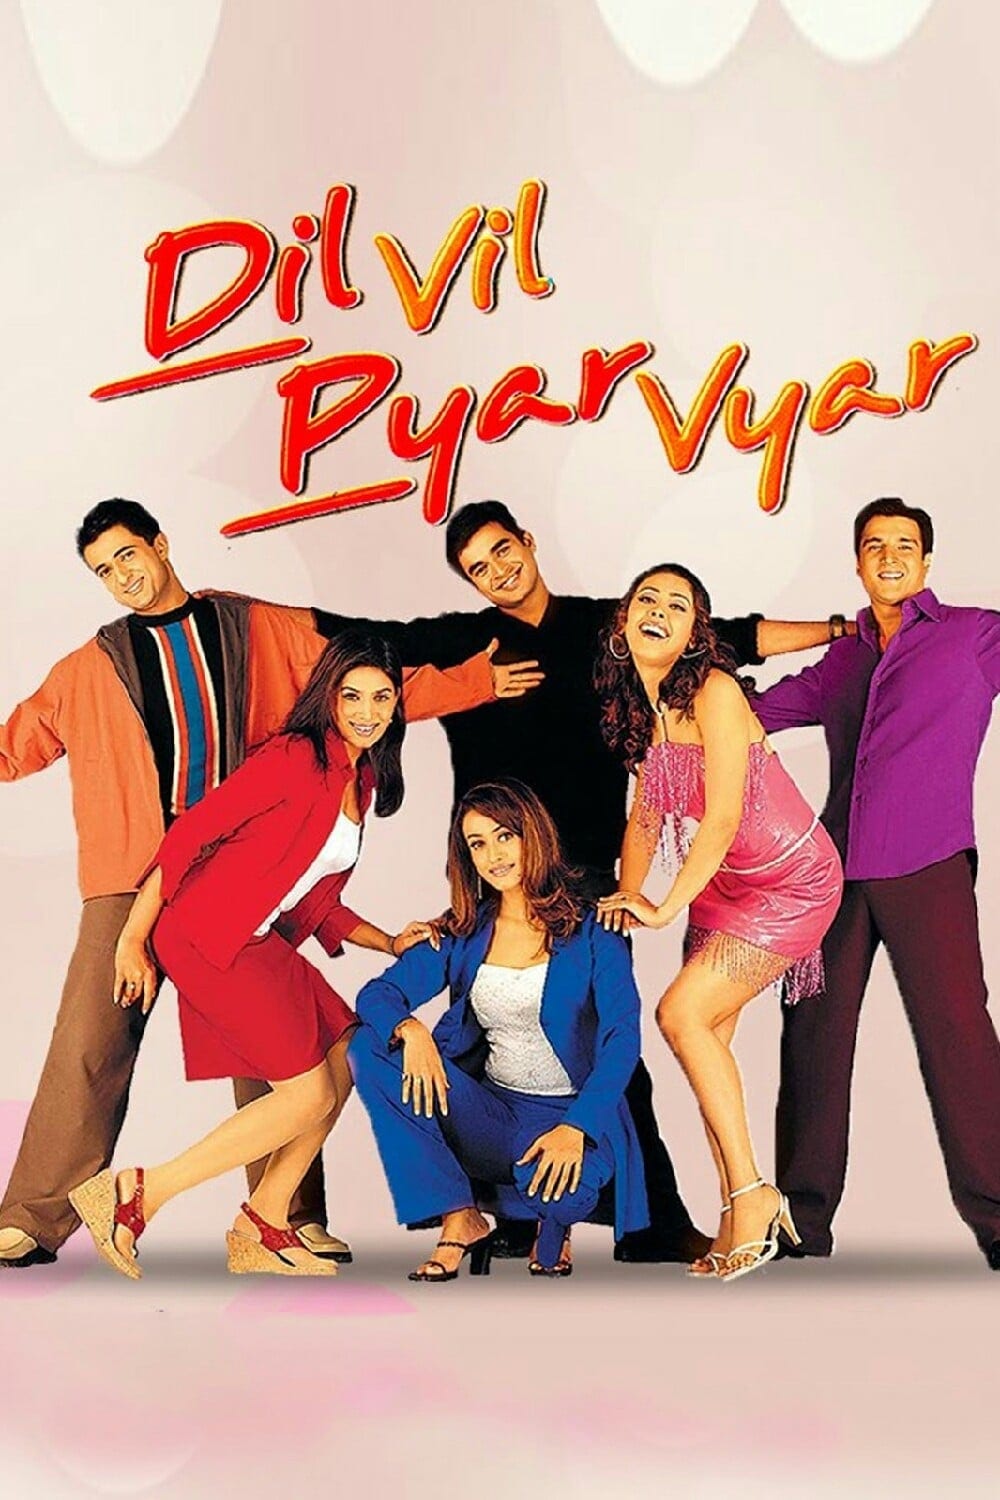 Poster for the movie "Dil Vil Pyar Vyar"